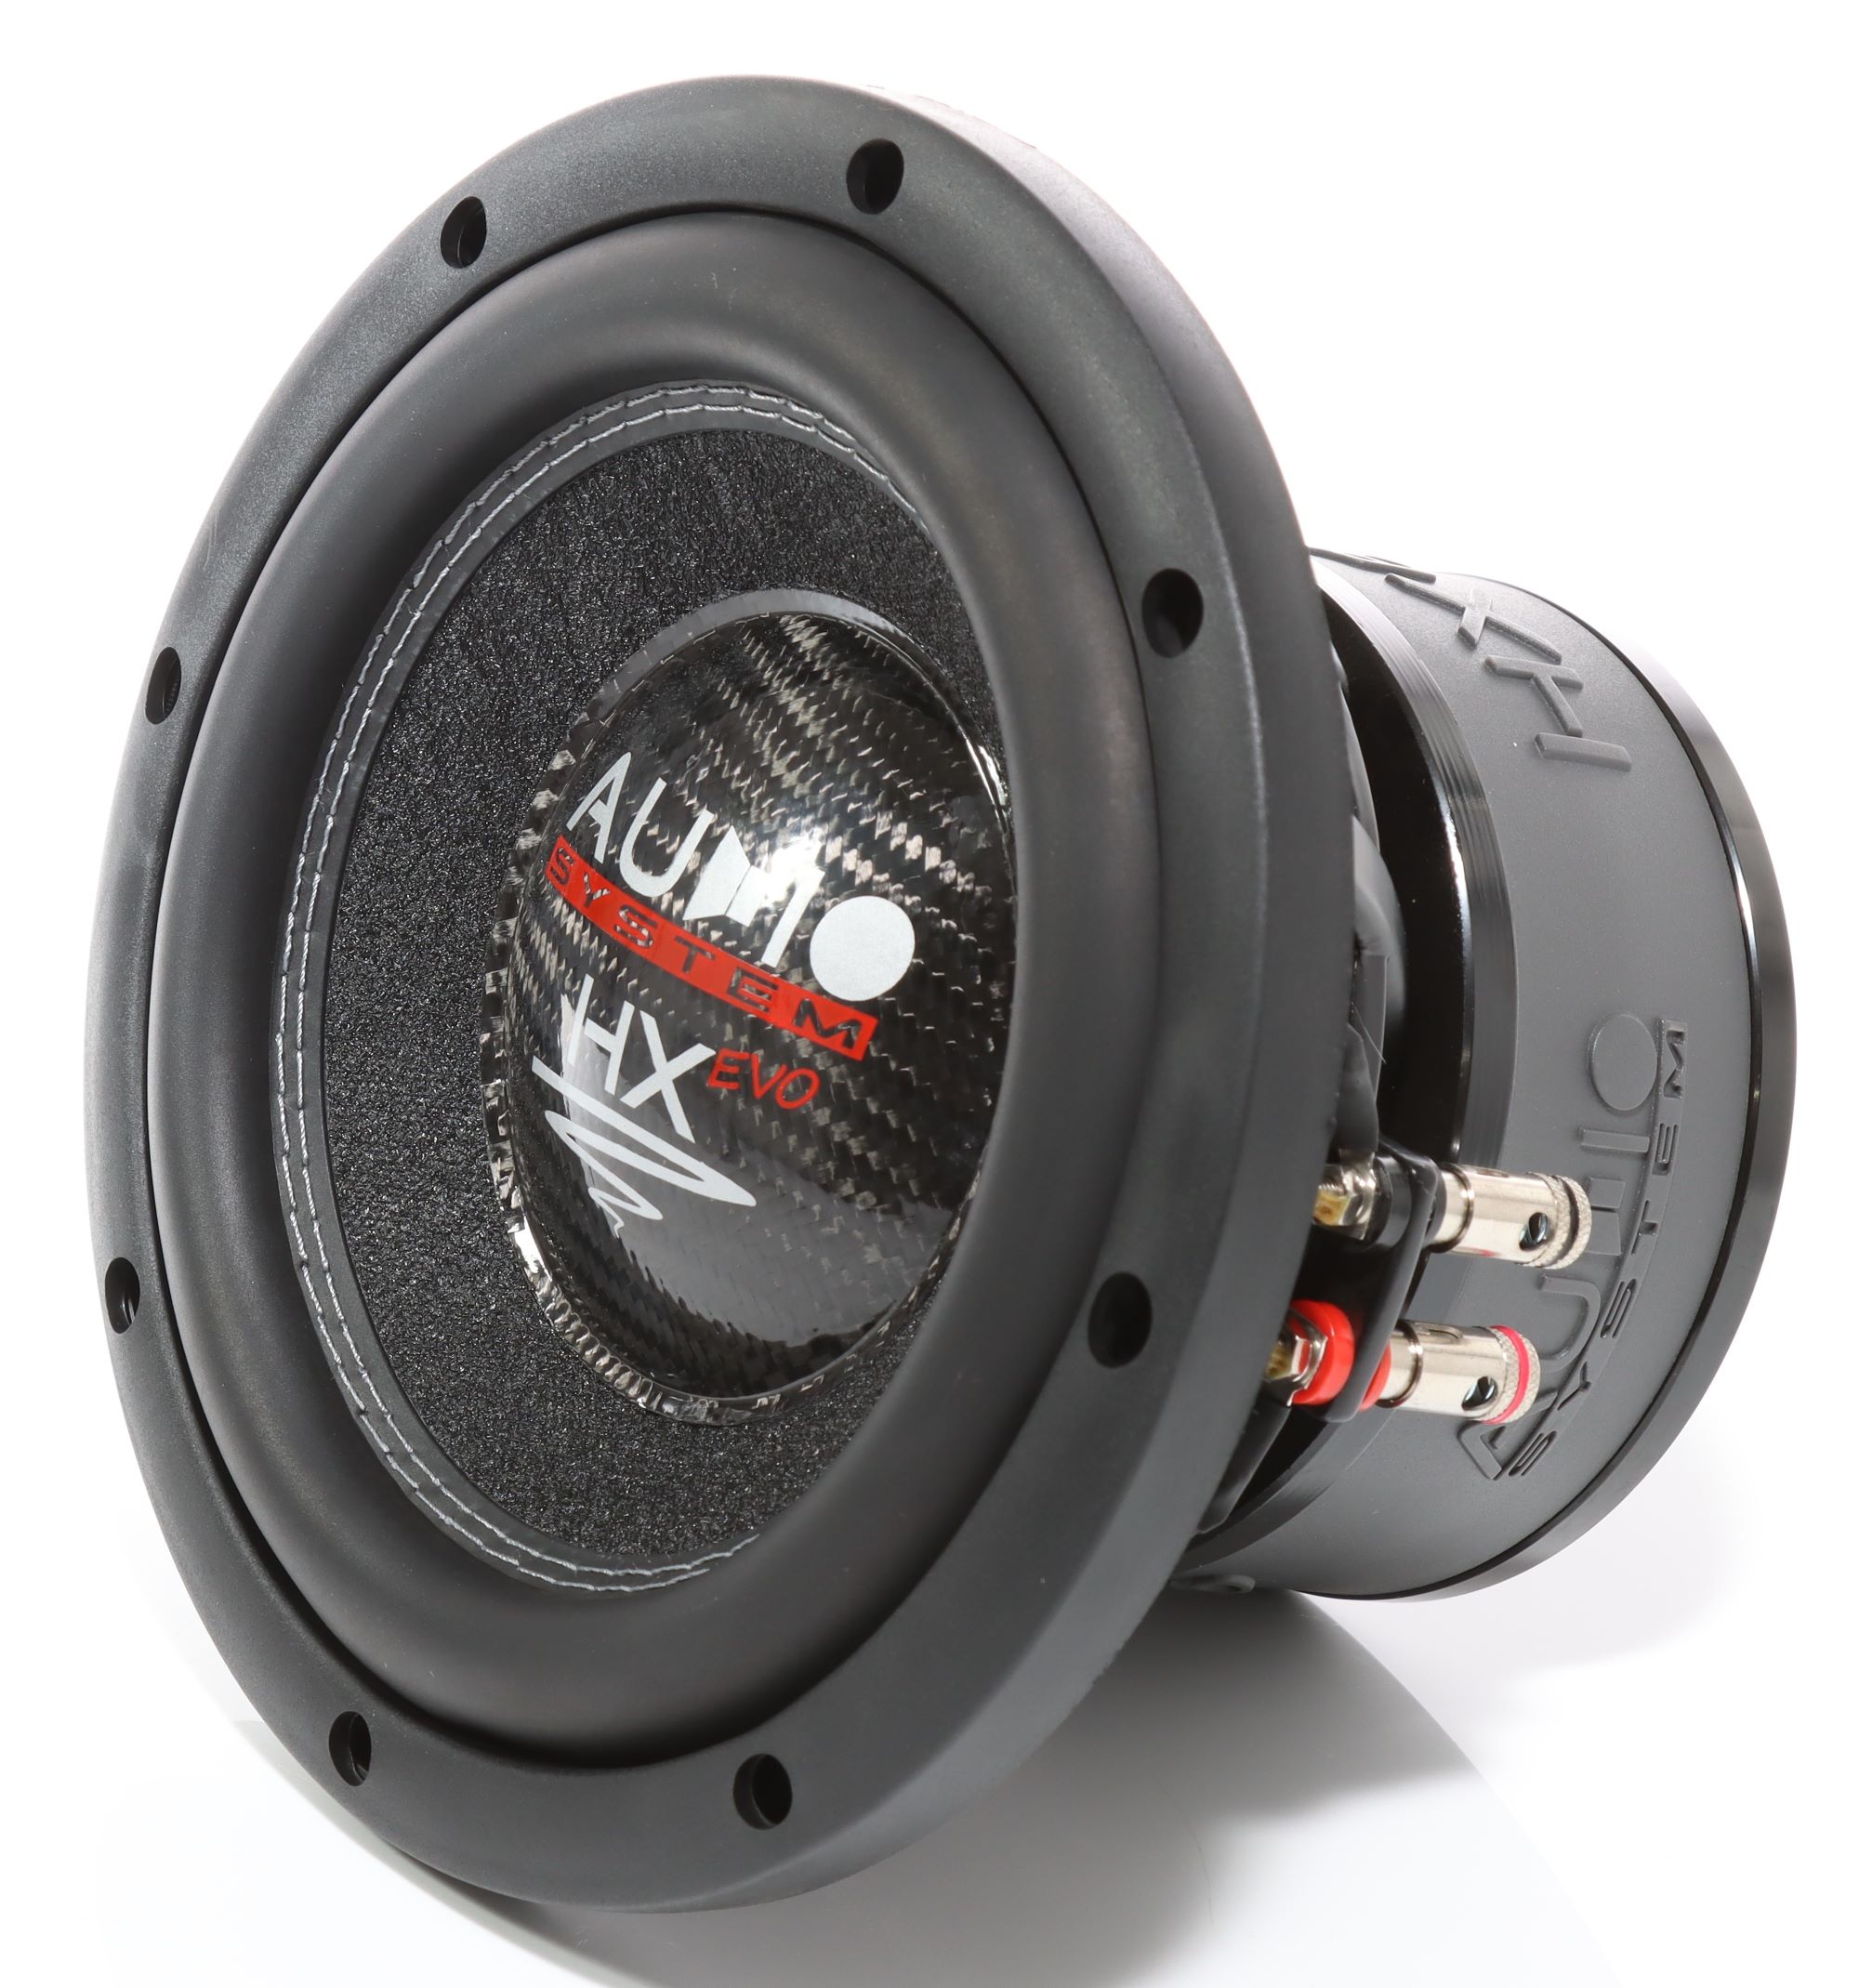 Audio System HX08 EVO HIGH-END Subwoofer HX-SERIES 20cm (8”) Woofer 